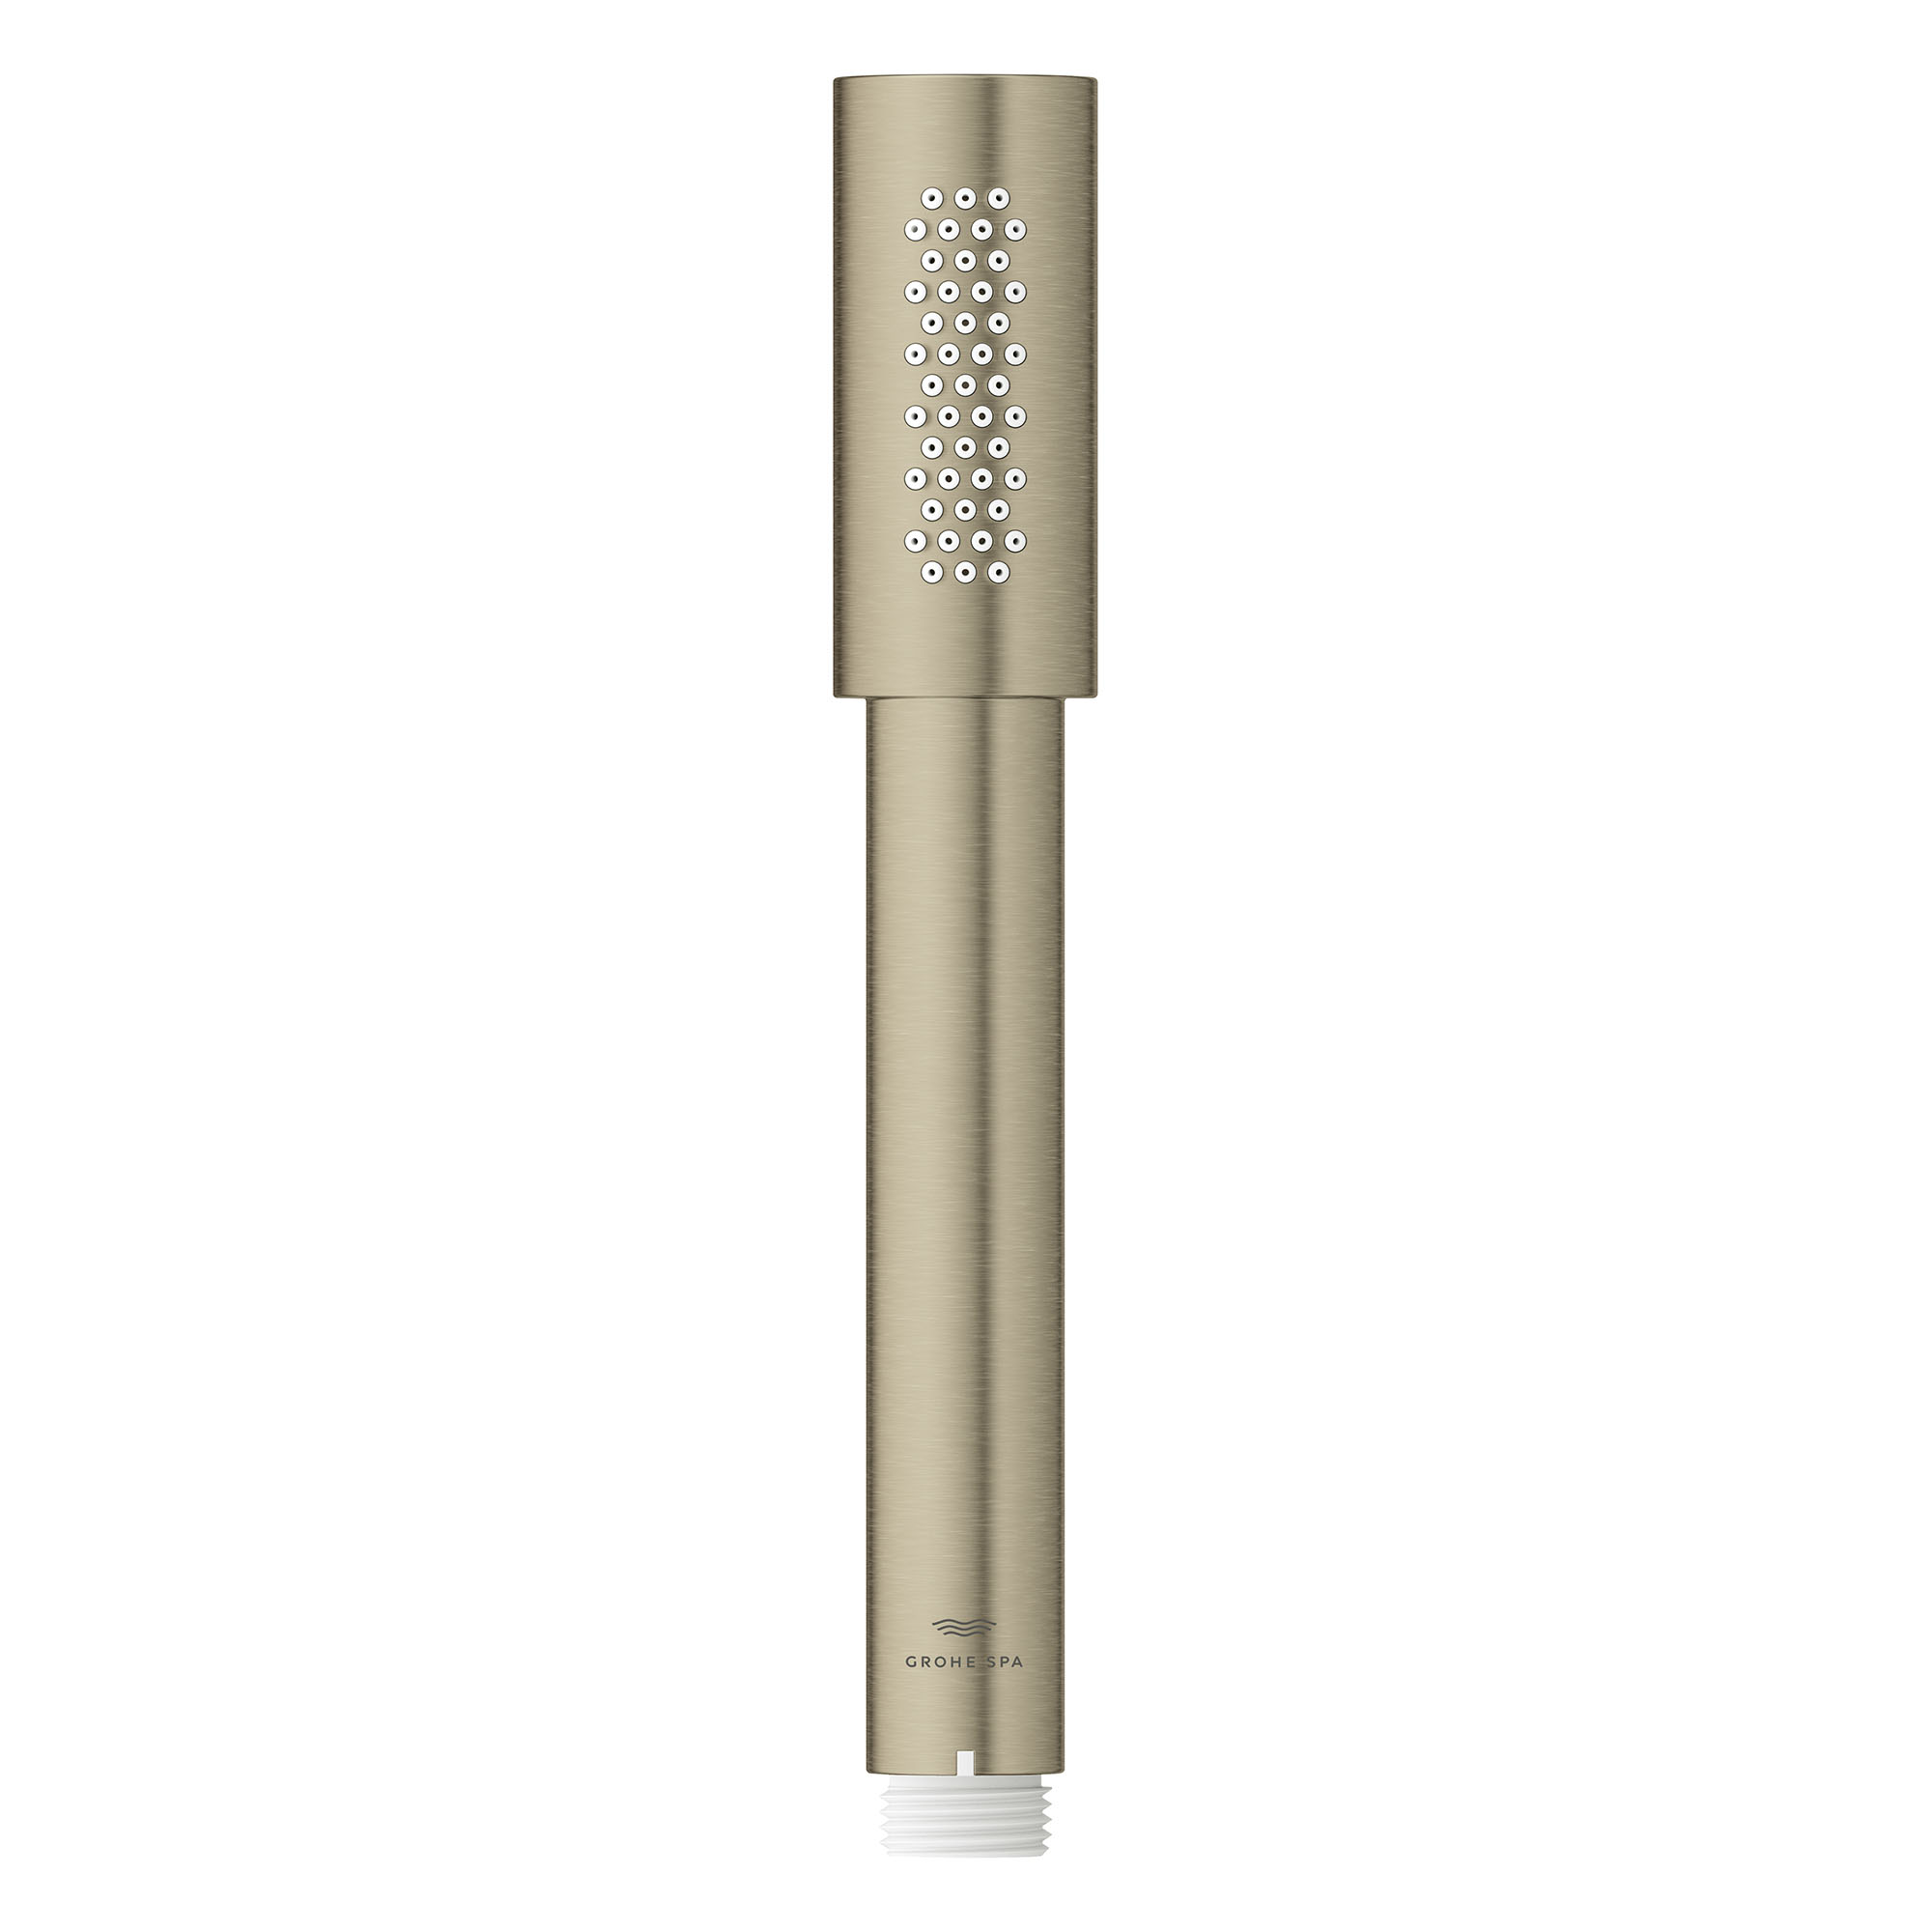 Sena Stick Hand Shower - 1 Spray, 1.75 GPM (6.6 L/min)